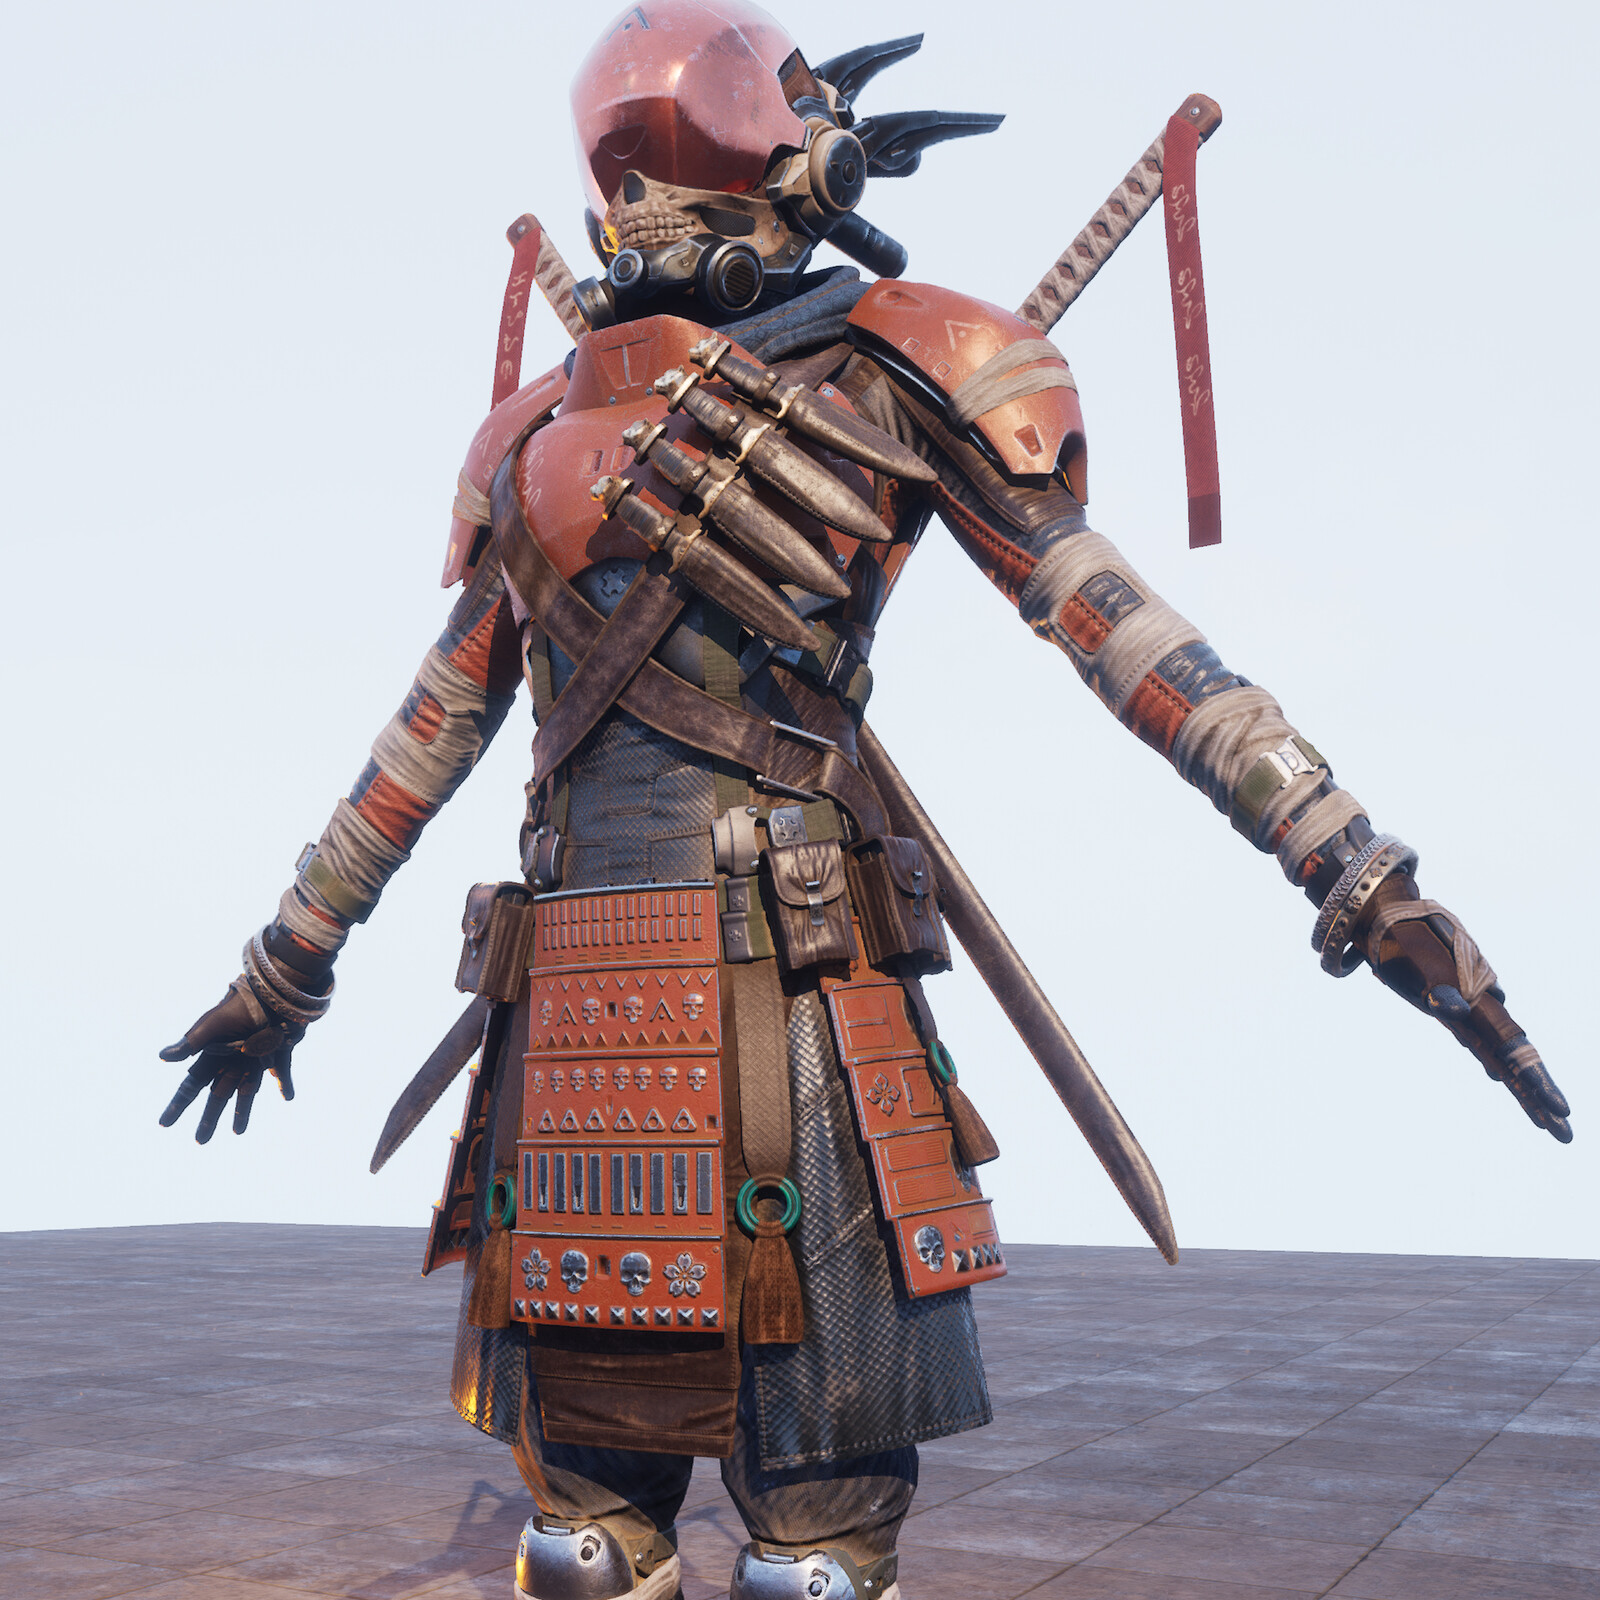 sci-fi samurai 3D CG character real time UE4 Unreal Engine

Real-time  Sci-fi Samurai 3D CG Character UE4 Unreal Engine